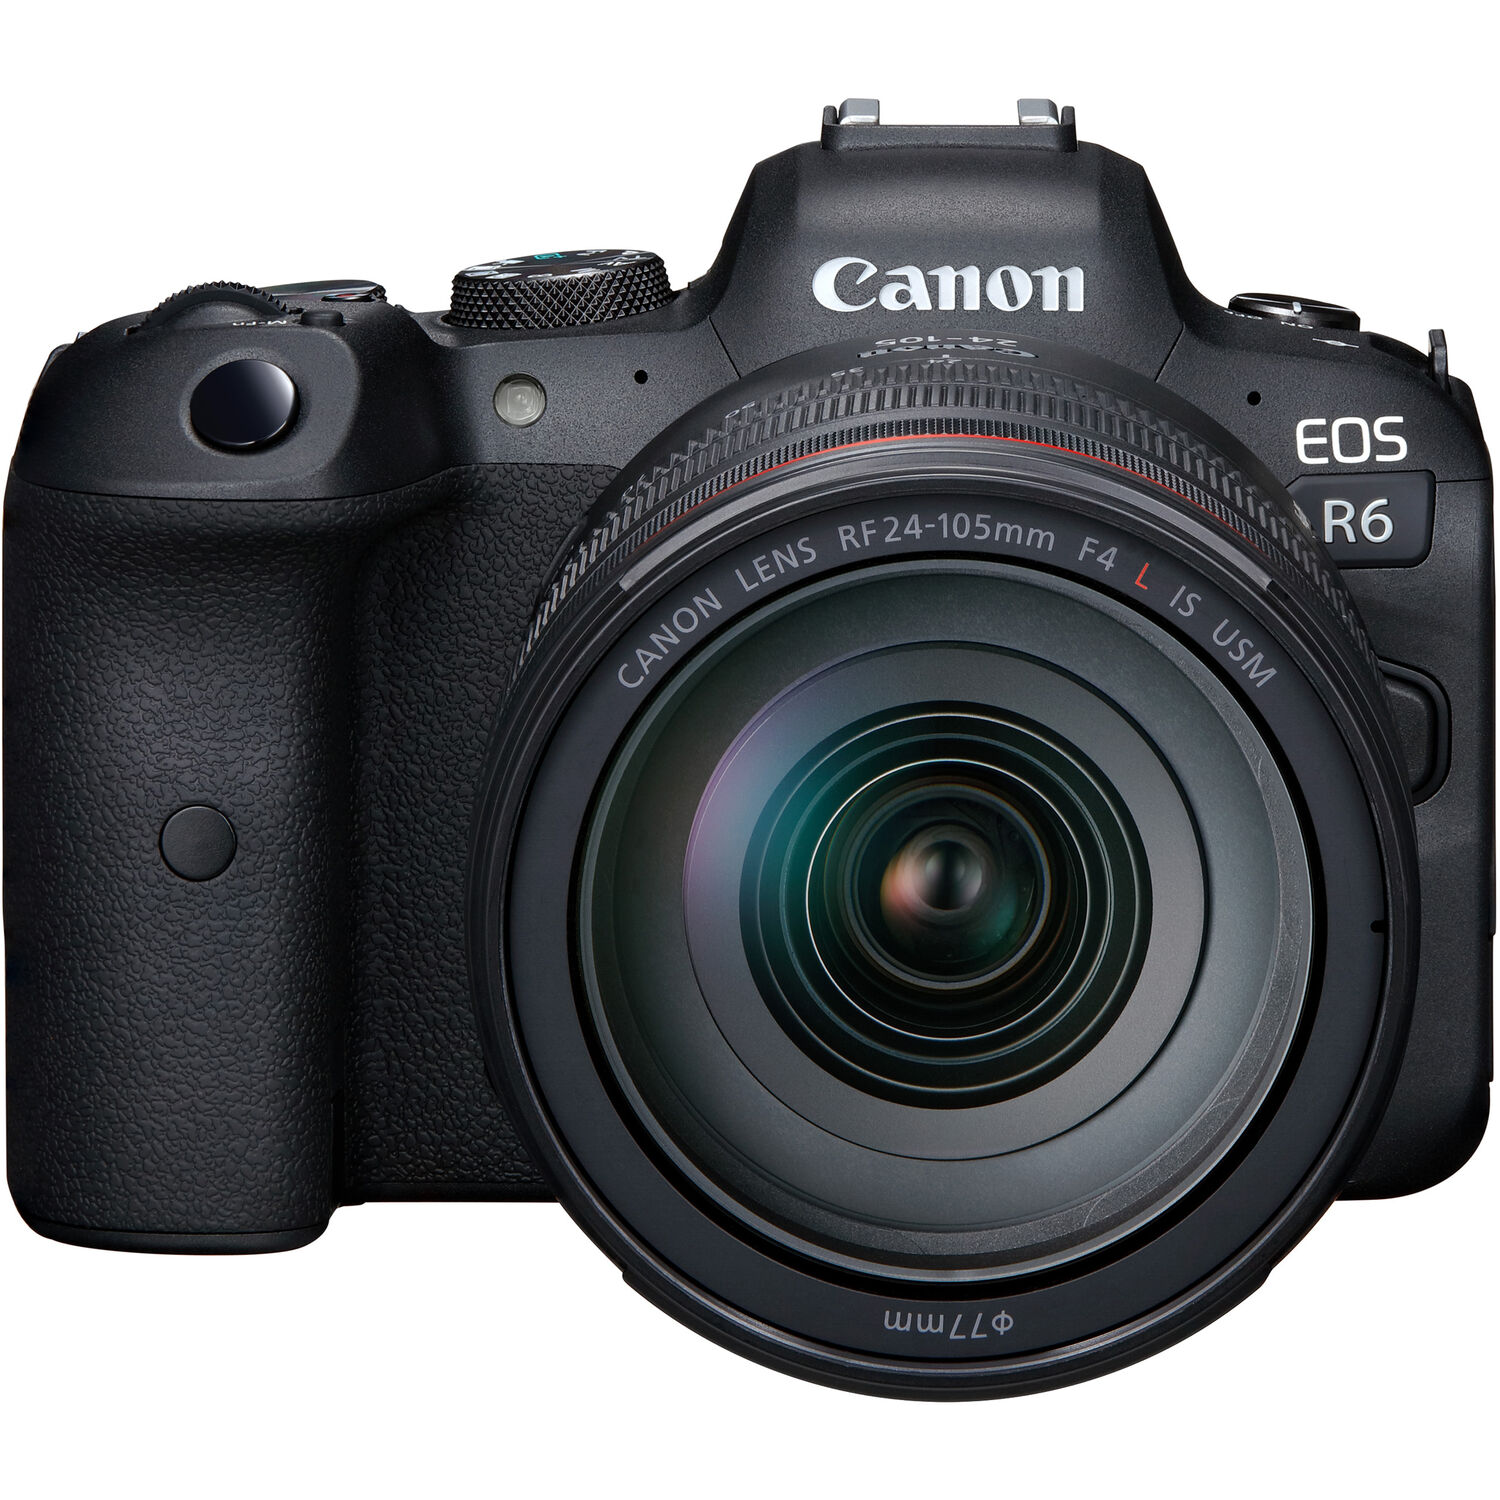 Canon EOS R6 Mirrorless Digital Camera with 24-105mm USM Lens Kit